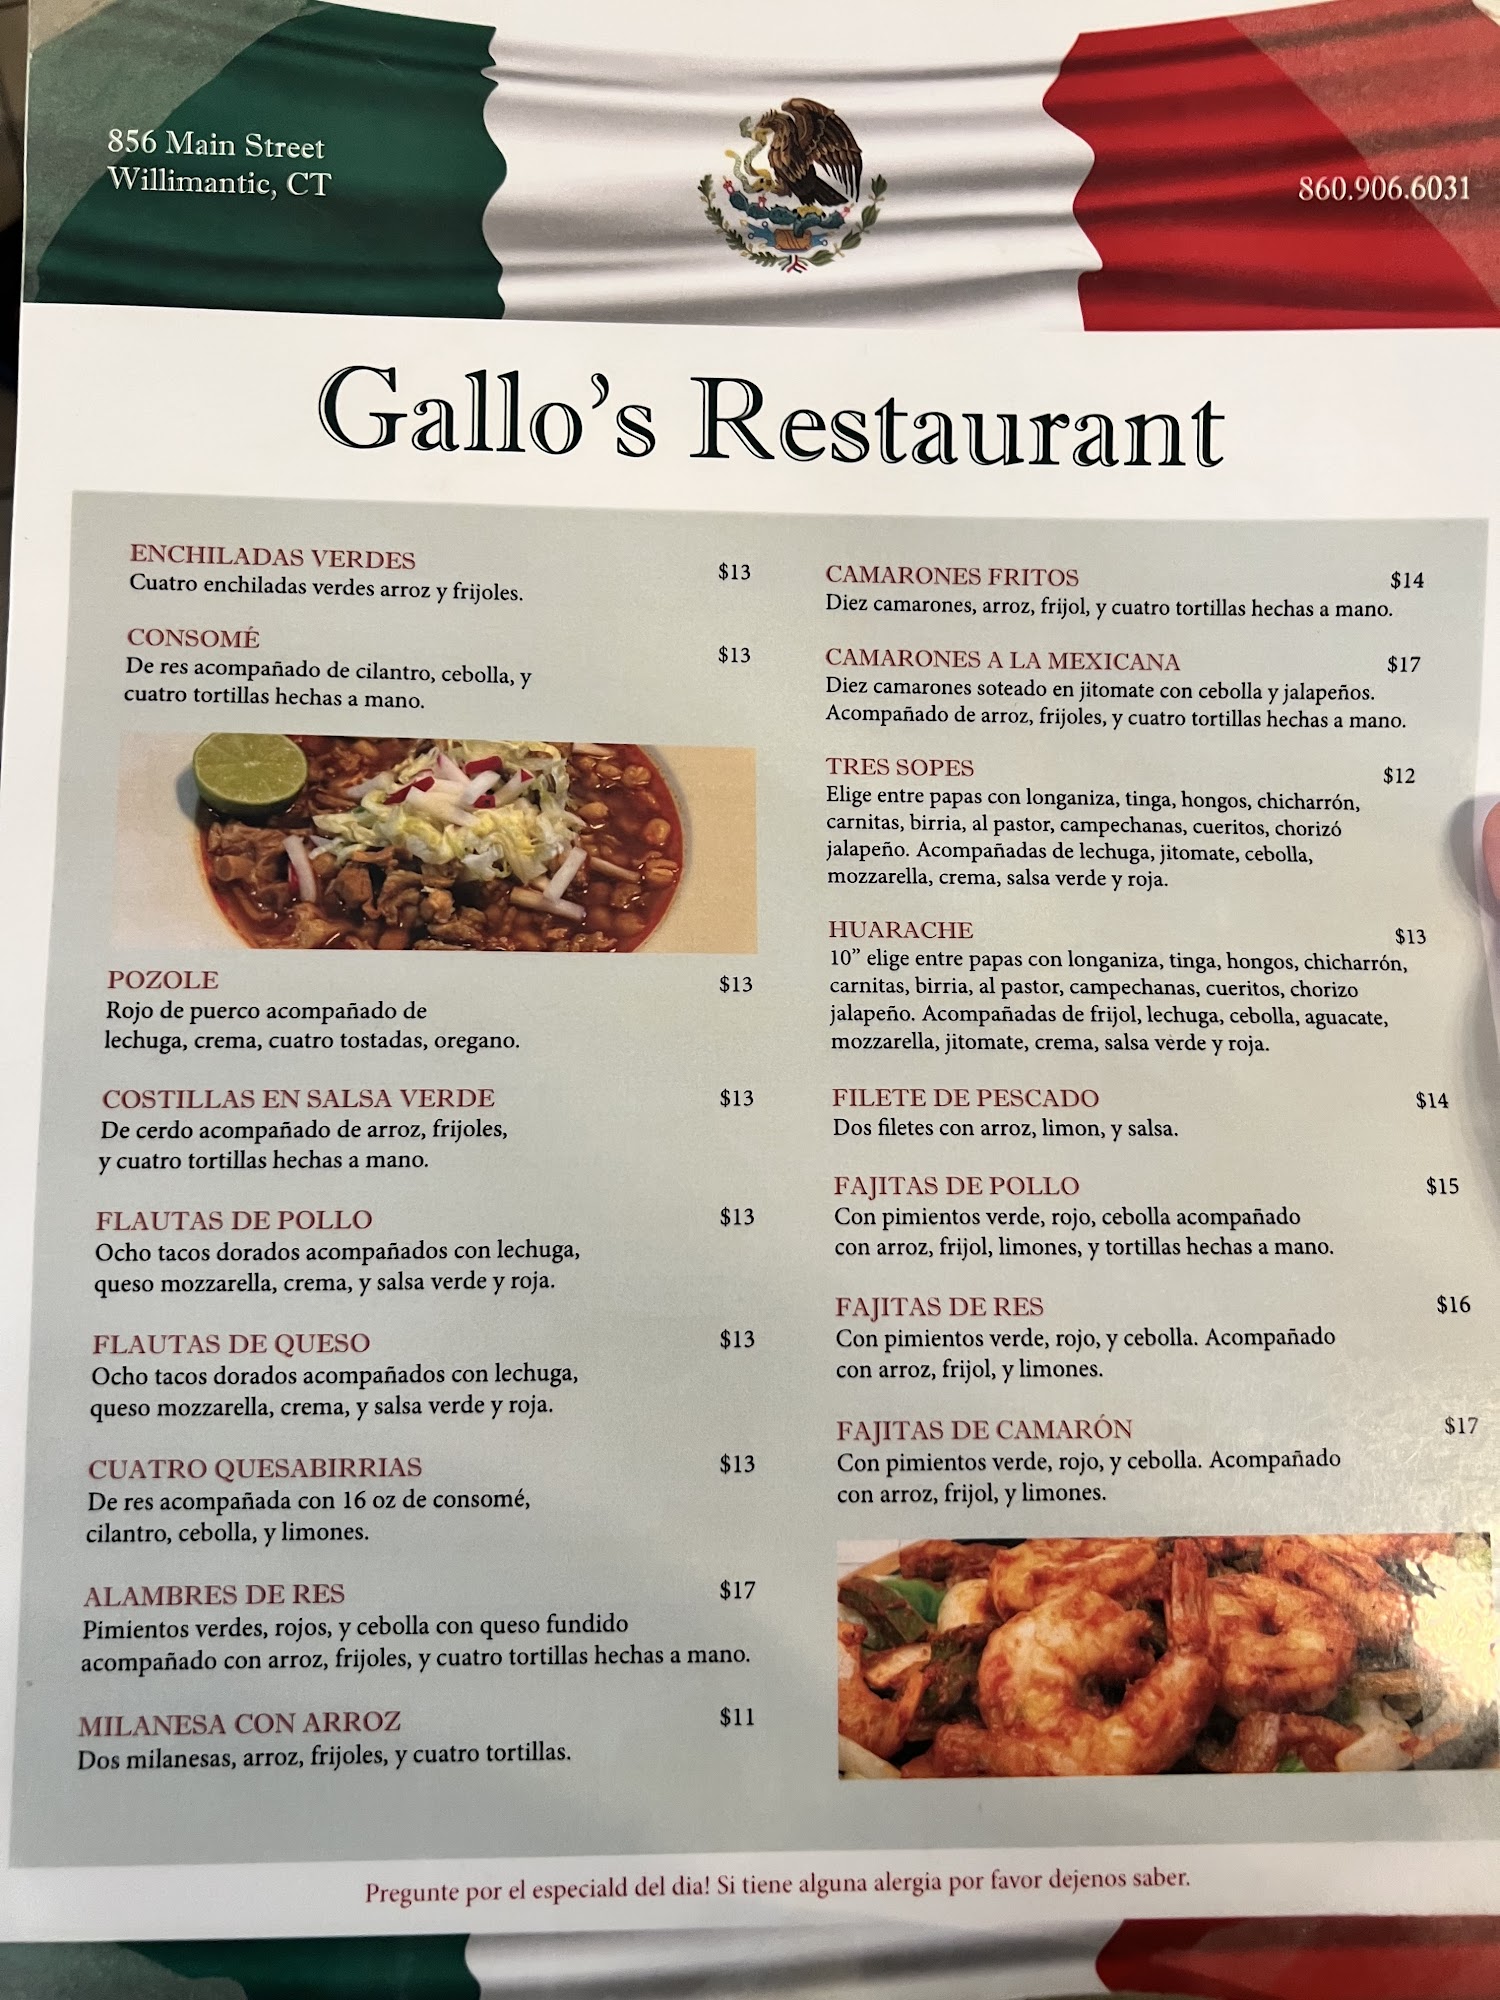 Gallo's Restaurant 856 Main St, Willimantic, CT 06226